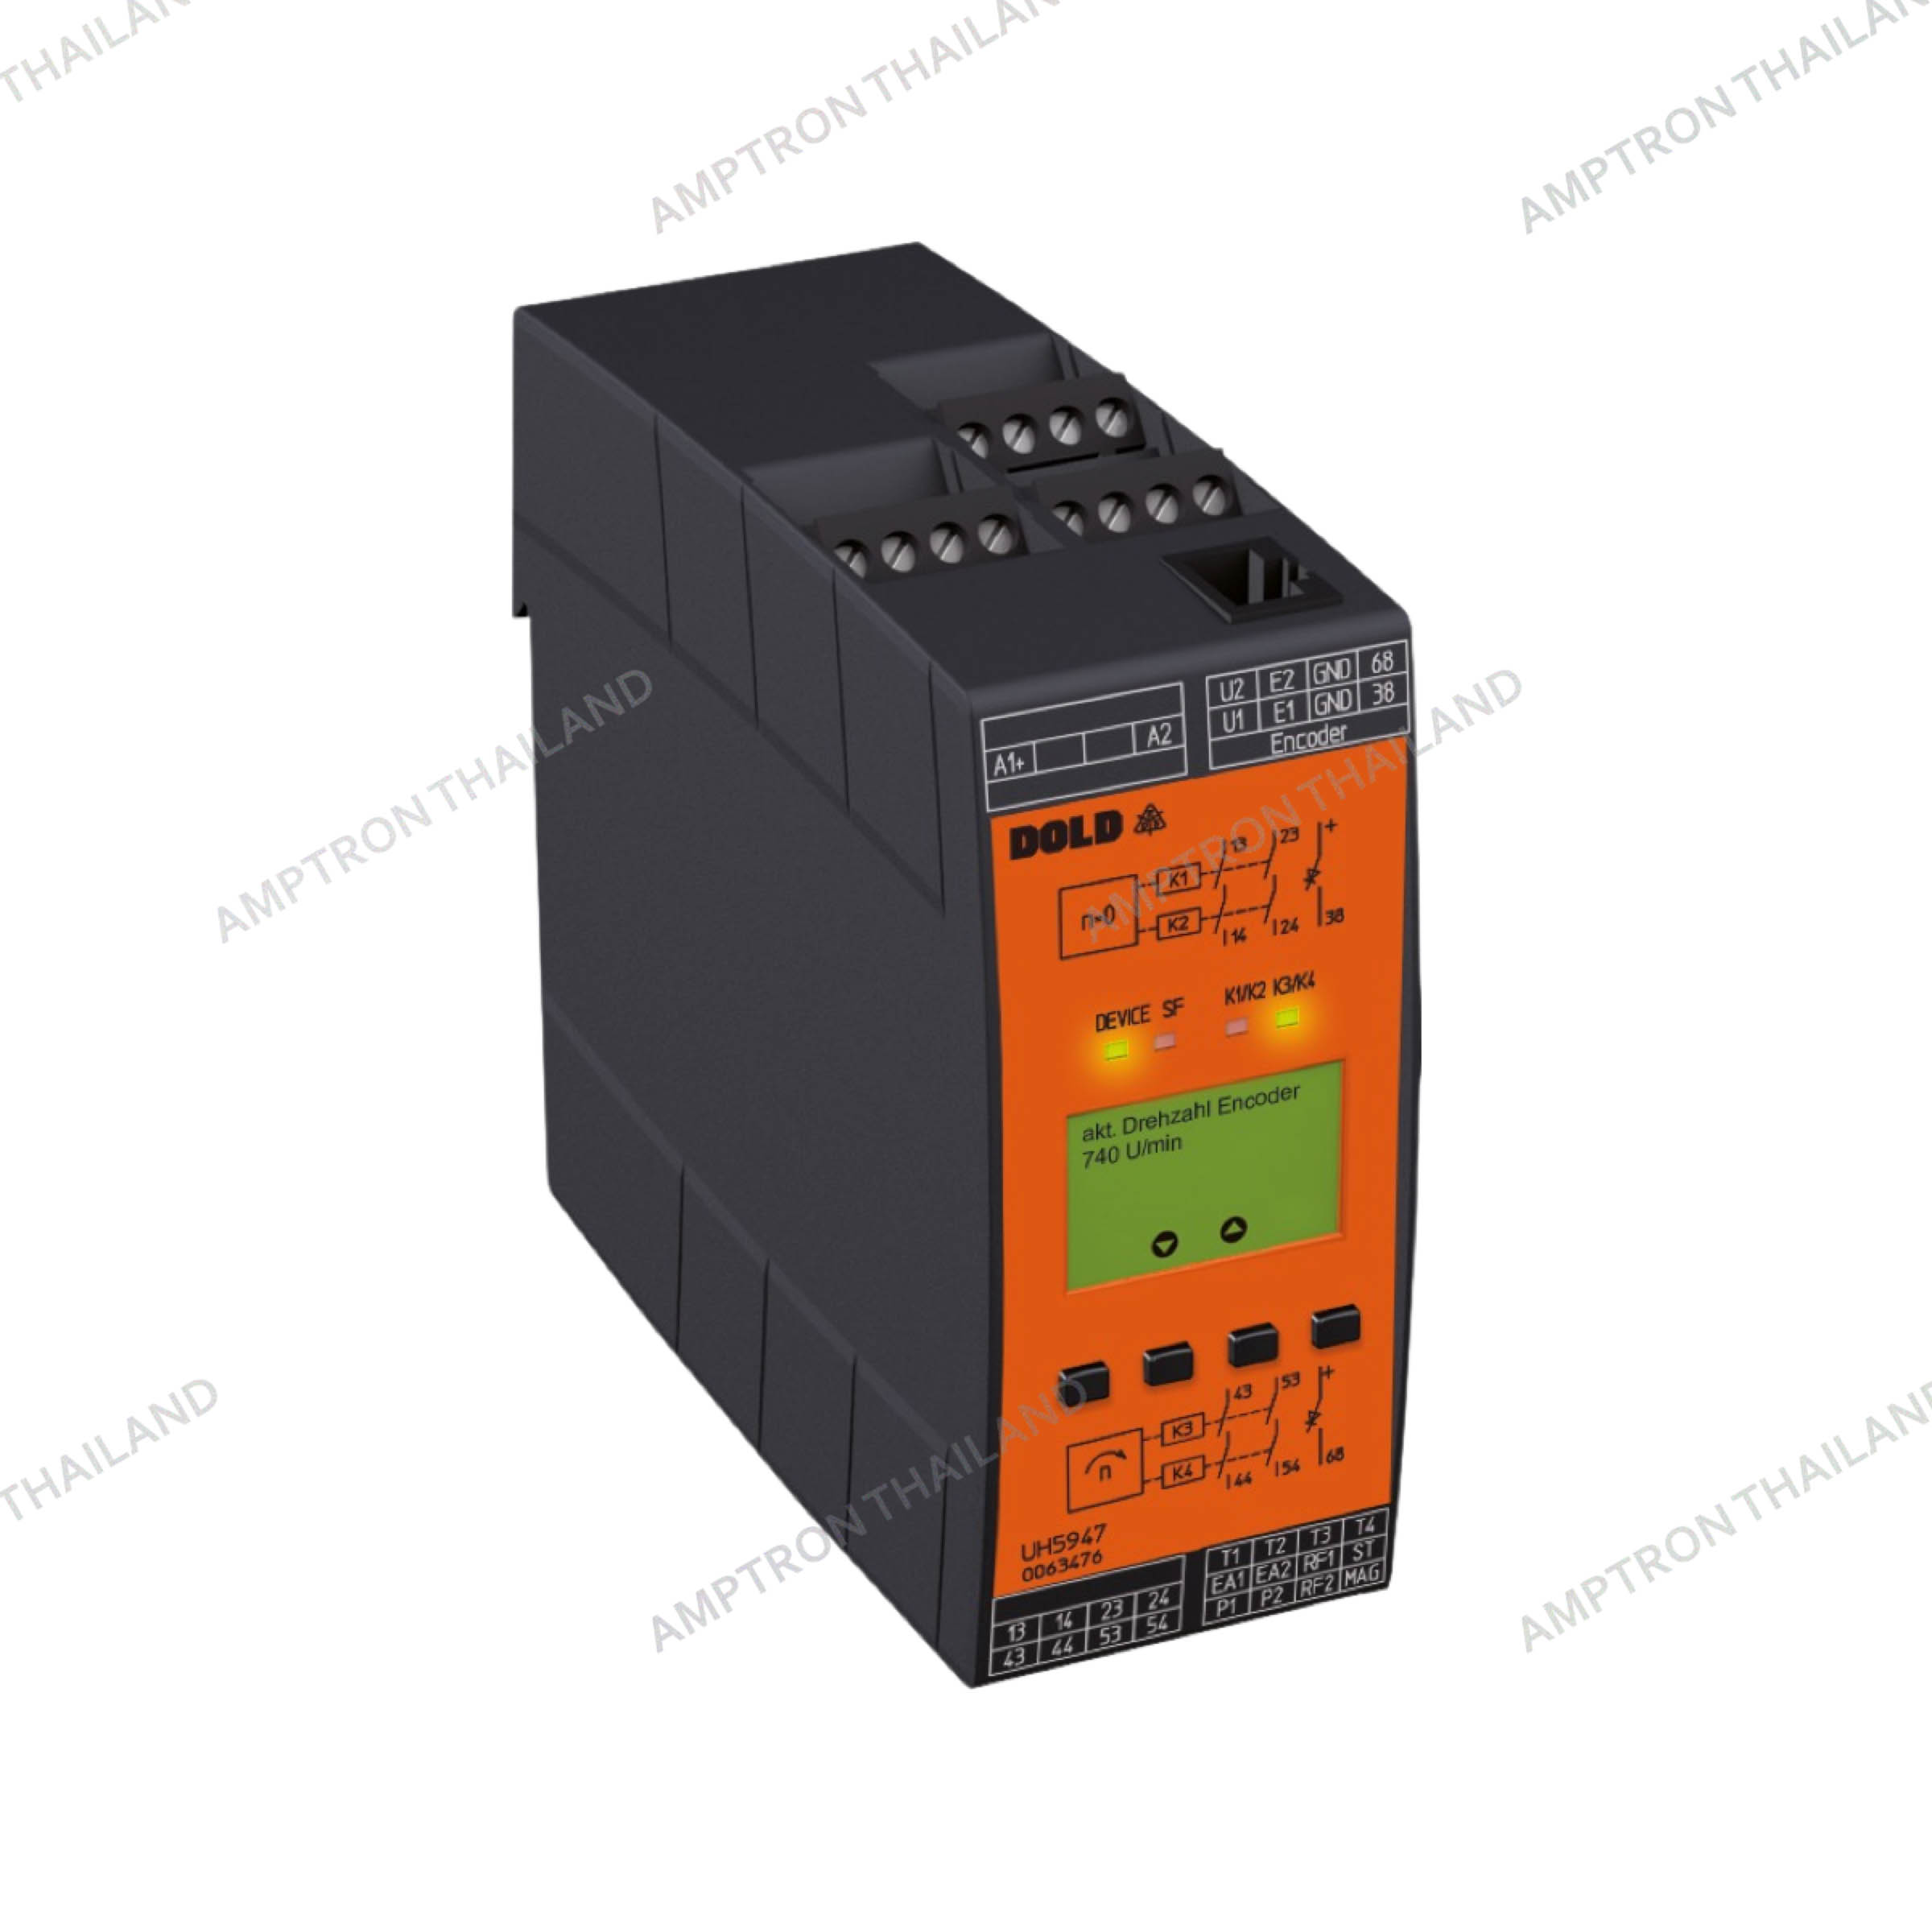 UH 5947 Safemaster S Speed Monitor